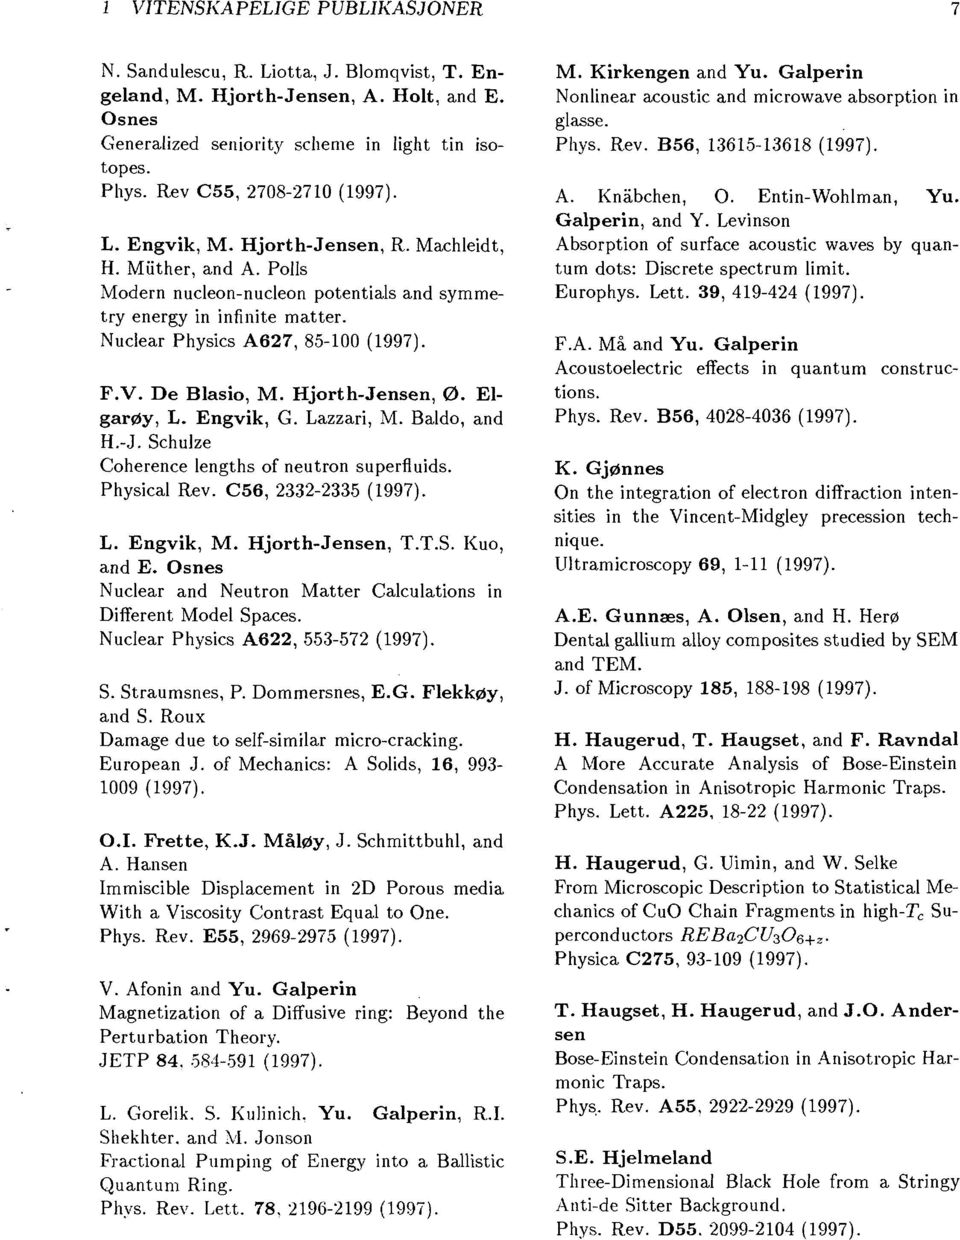 De Blasio, M. Hjorth-Jensen,. Elgarøy, L. Engvik, G. Lazzari, M. Baldo, and H.-J. Schulze Coherence lengths of neutron superfluids. Physical Rev. C56, 2332-2335 L. Engvik, M. Hjorth-Jensen, T.T.S. Kuo, and E.